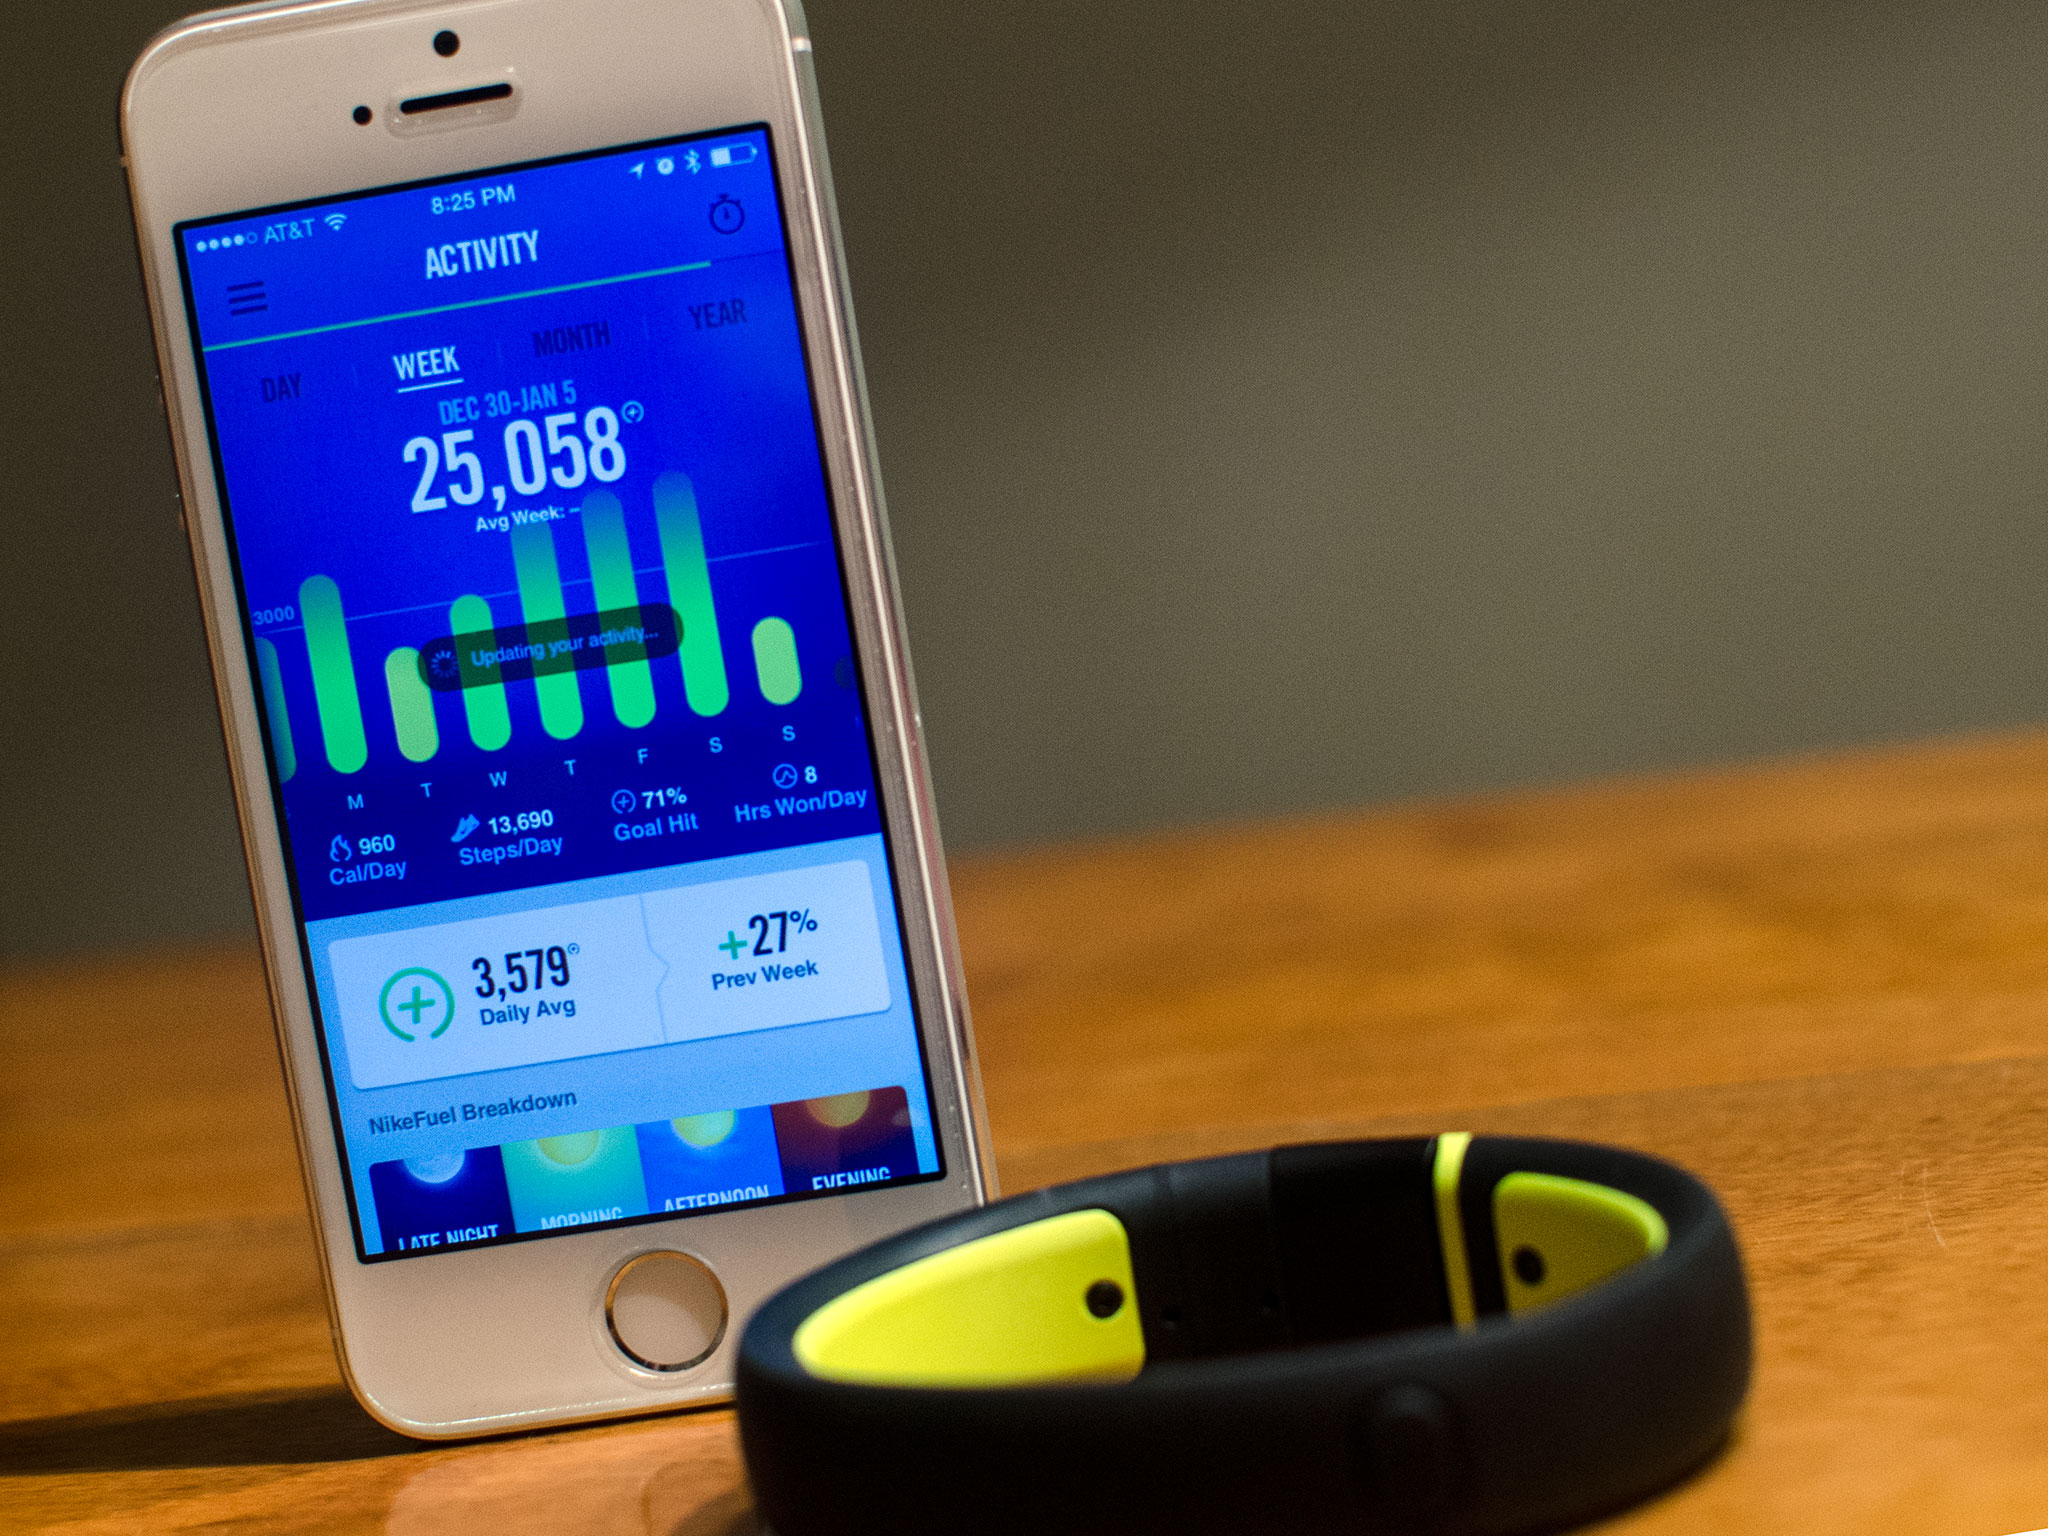 Best fitness tracker: Fitbit Flex vs Jawbone UP24 vs Nike FuelBand SE vs Garmin vivofit!